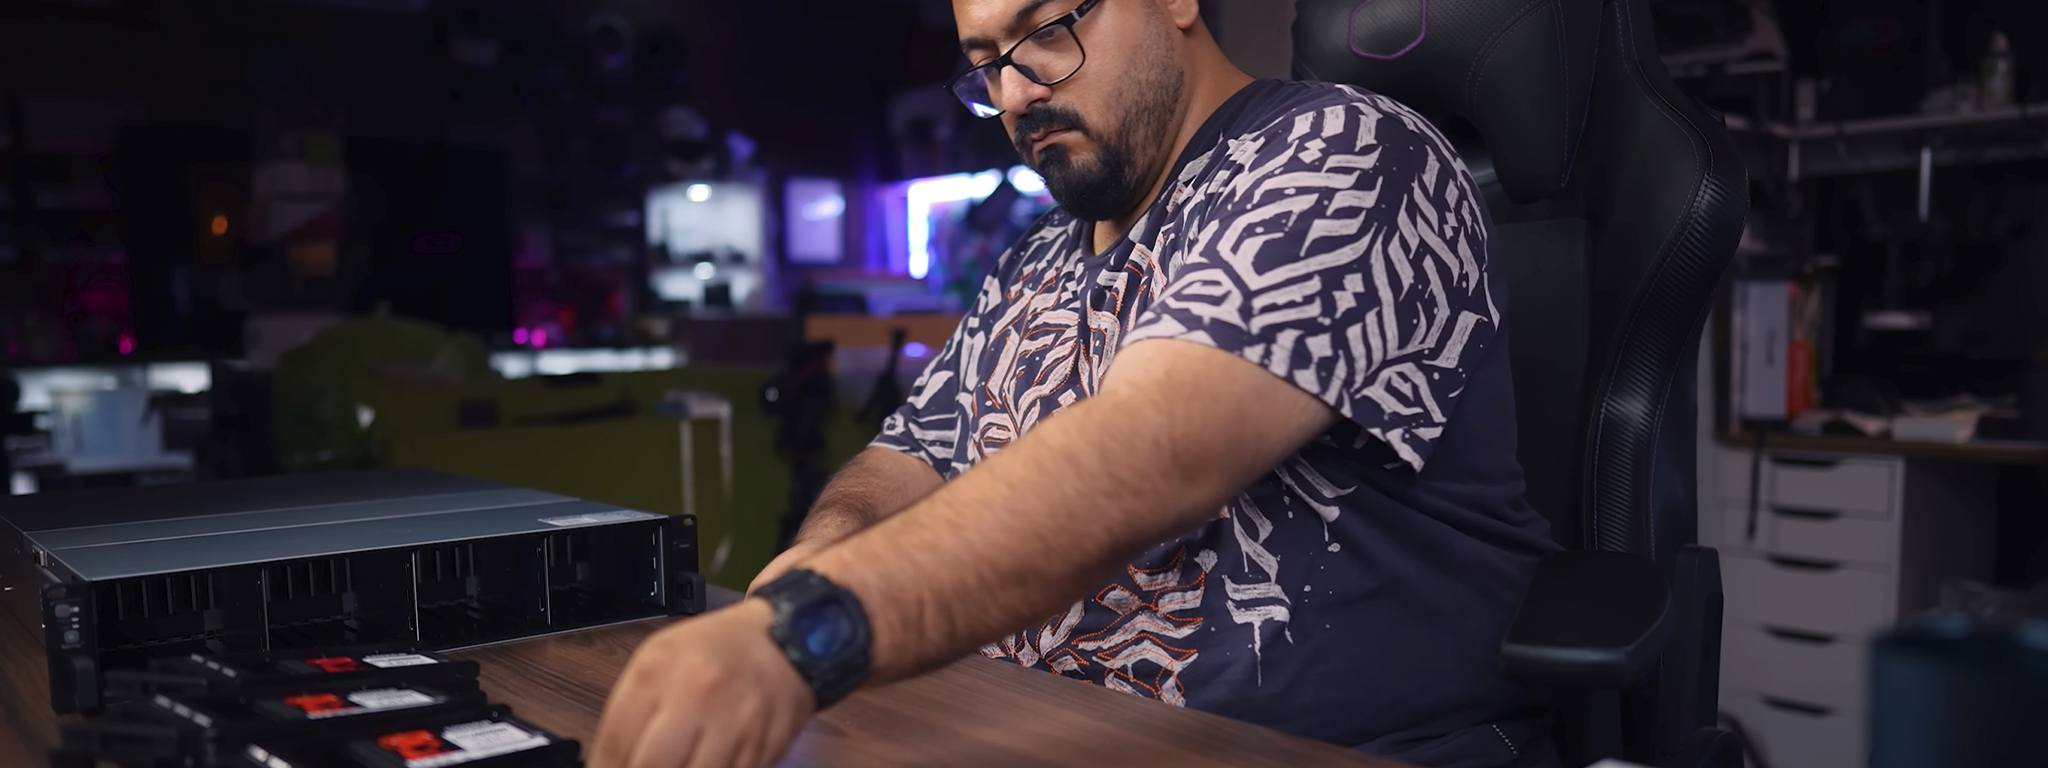 Salah Hamed(Android Basha의 인플루언서)가 책상 위 서버 랙에 DC600M SSD를 설치하는 모습